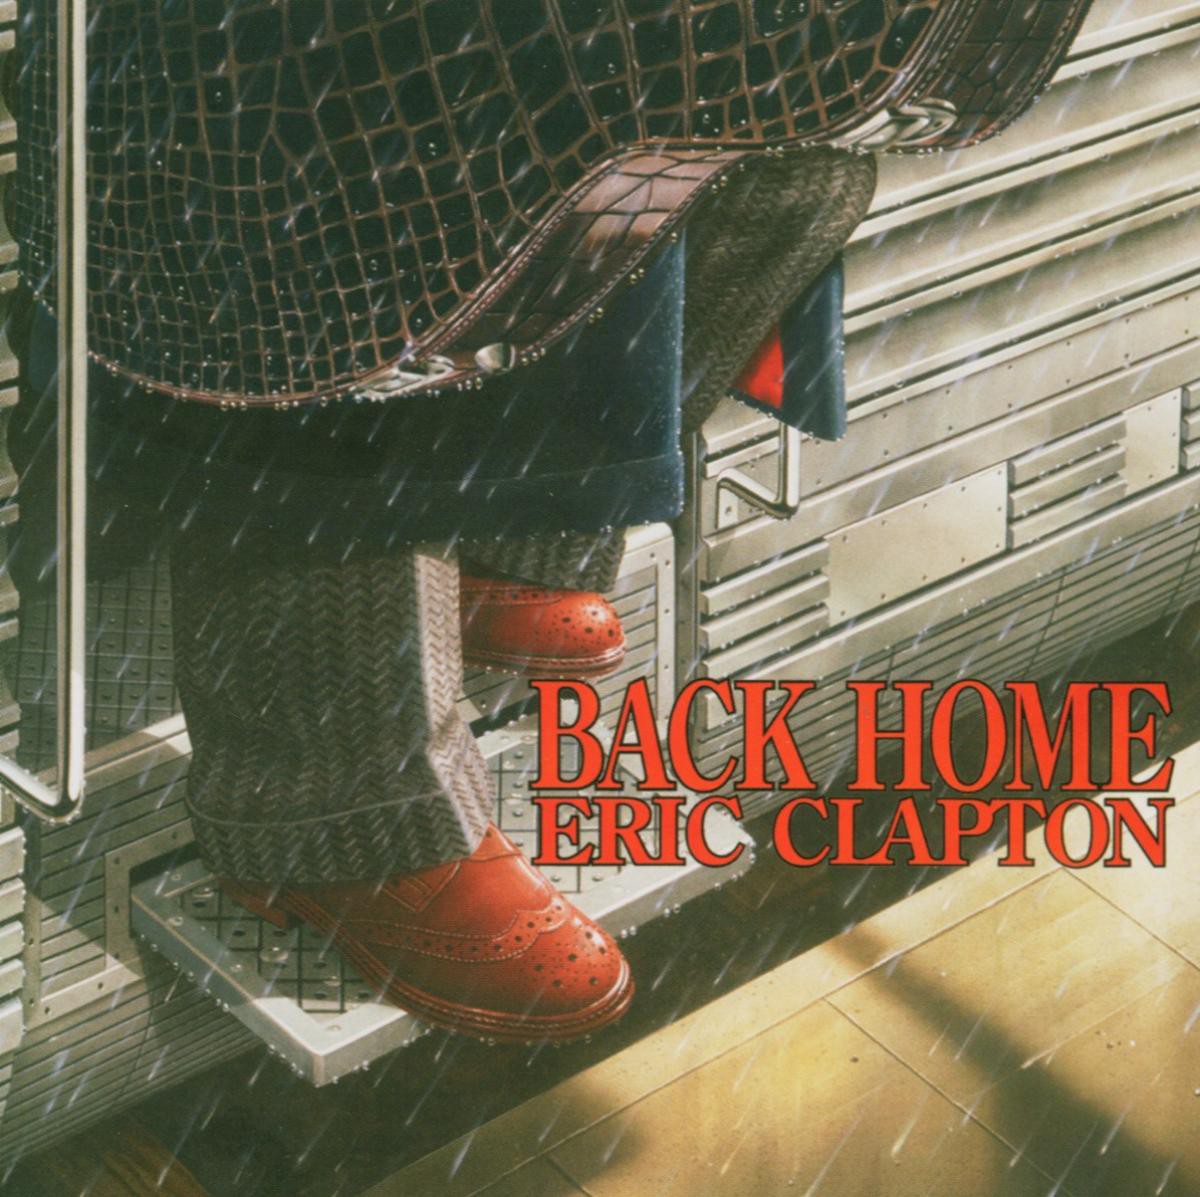 Back home русский. Eric Clapton back Home 2005. Clapton Eric "back Home". Eric Clapton back Home LP. Обложка альбом Клэптон.